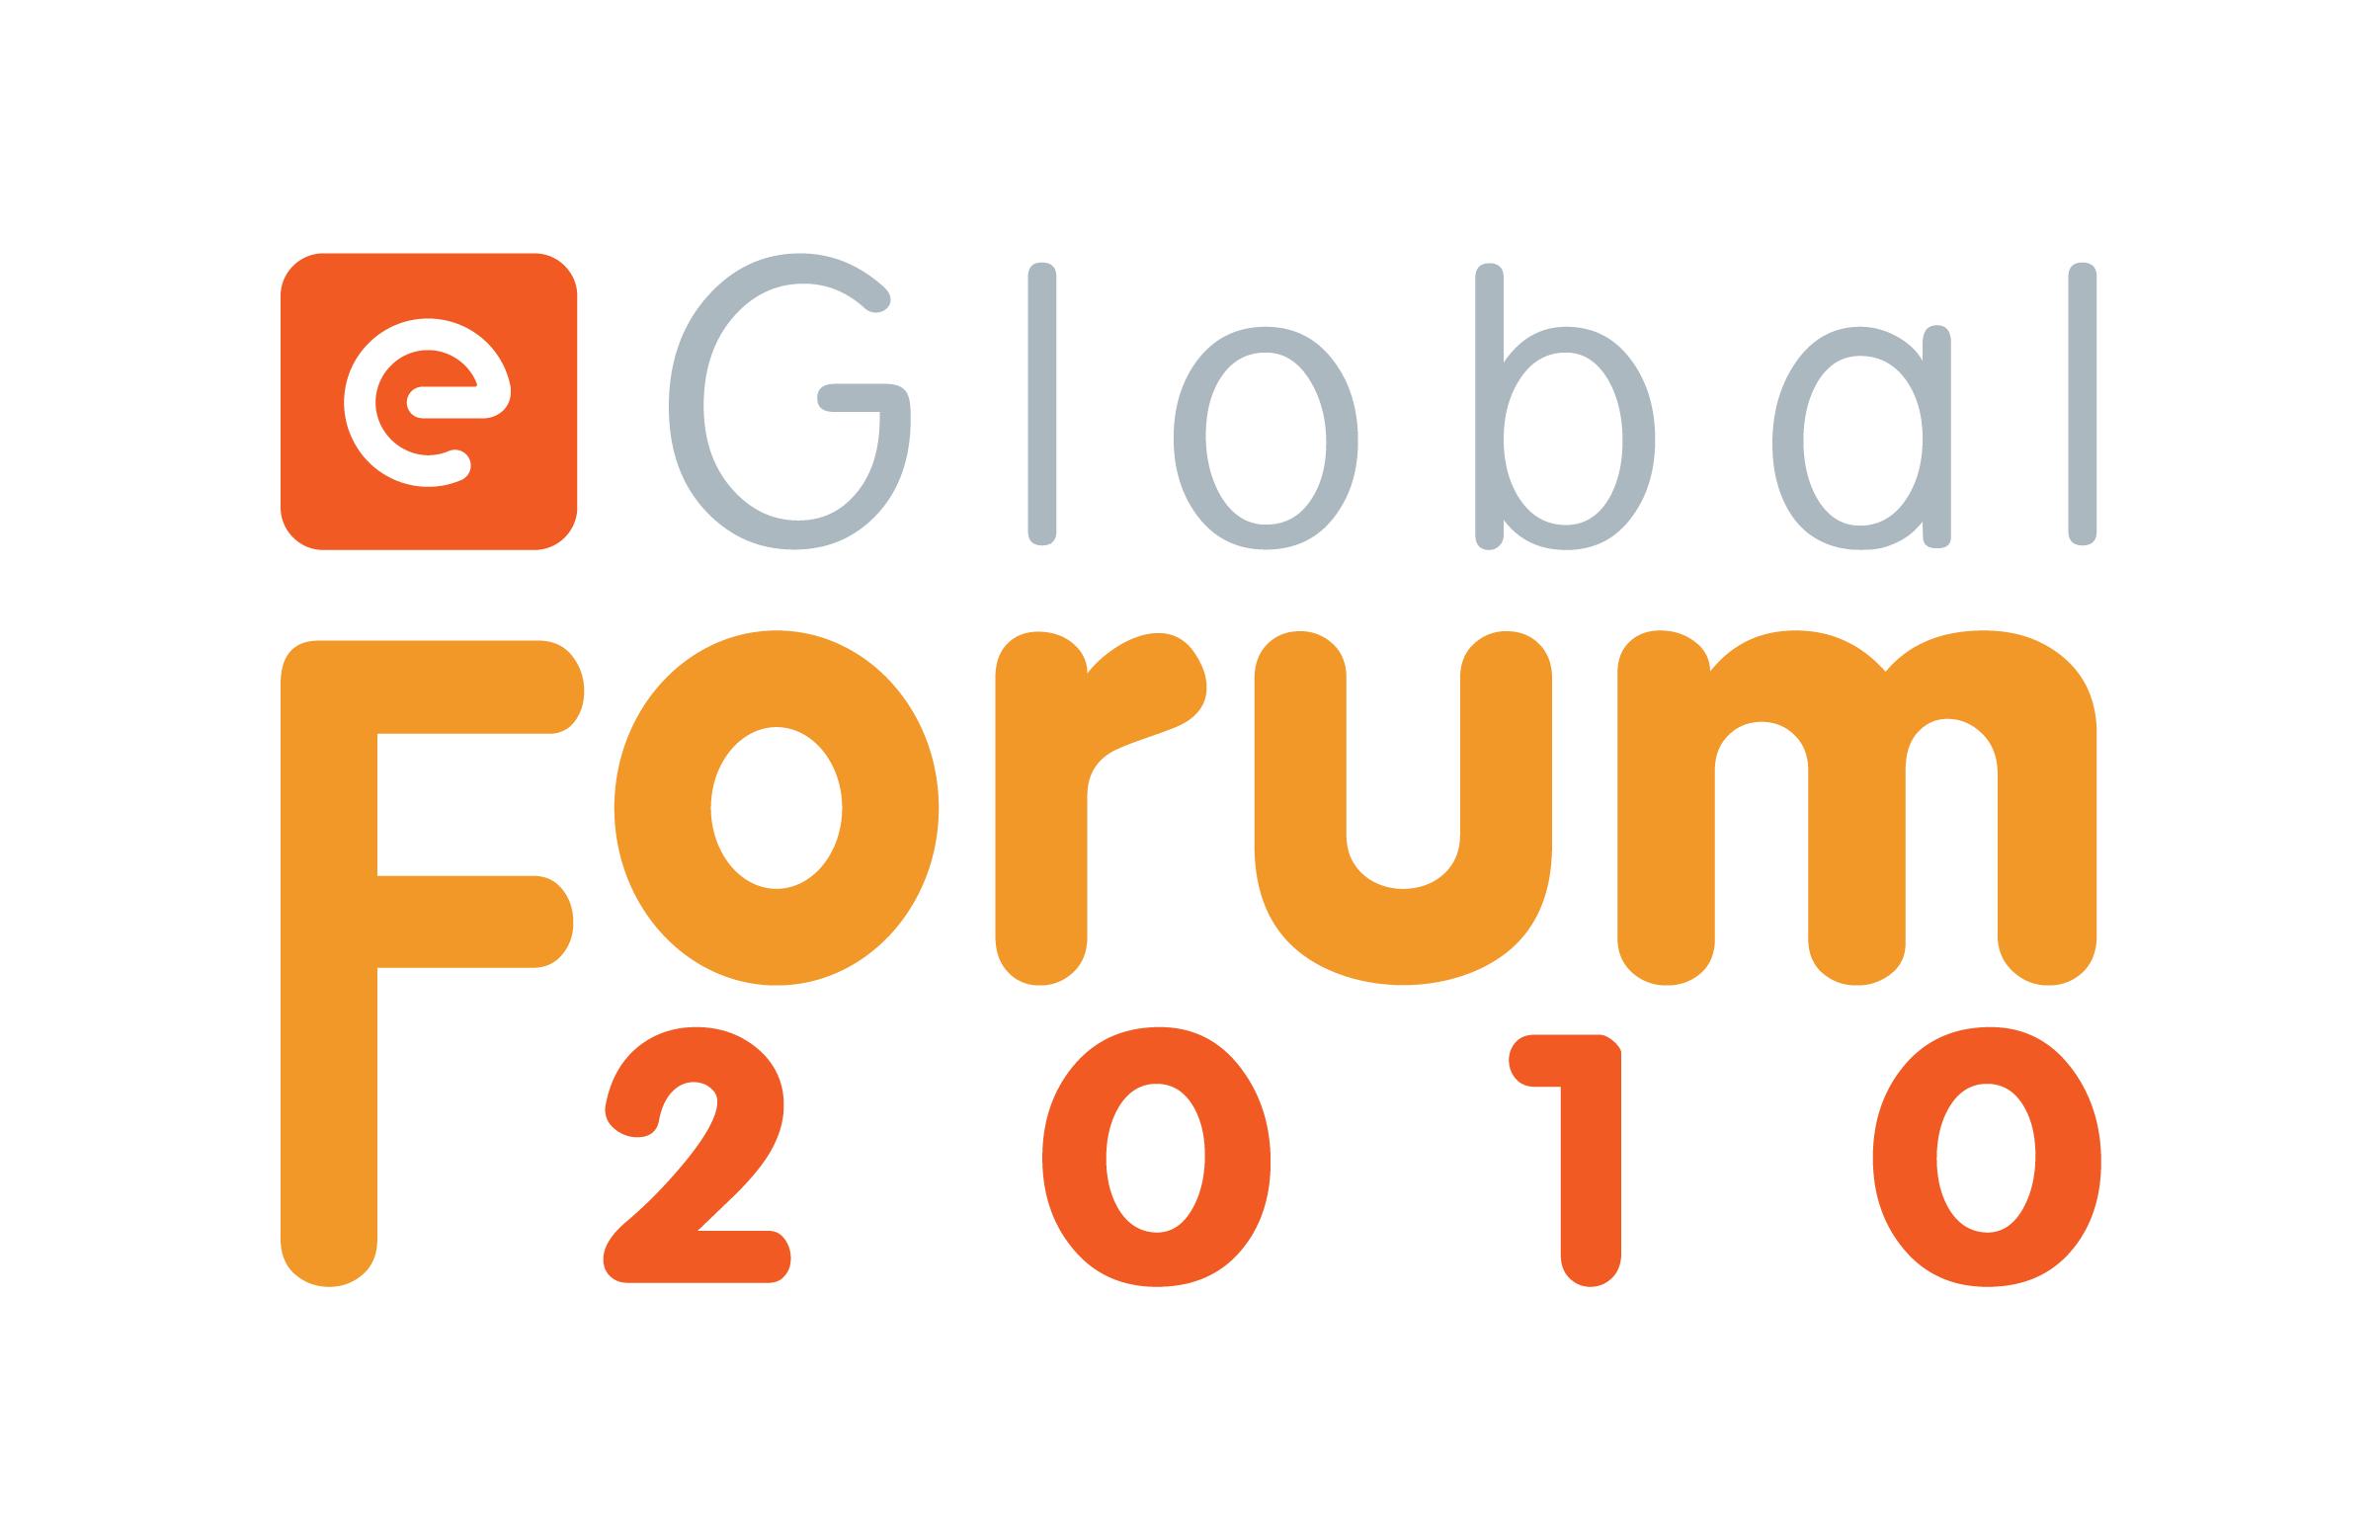 ESI Global Forum 2010